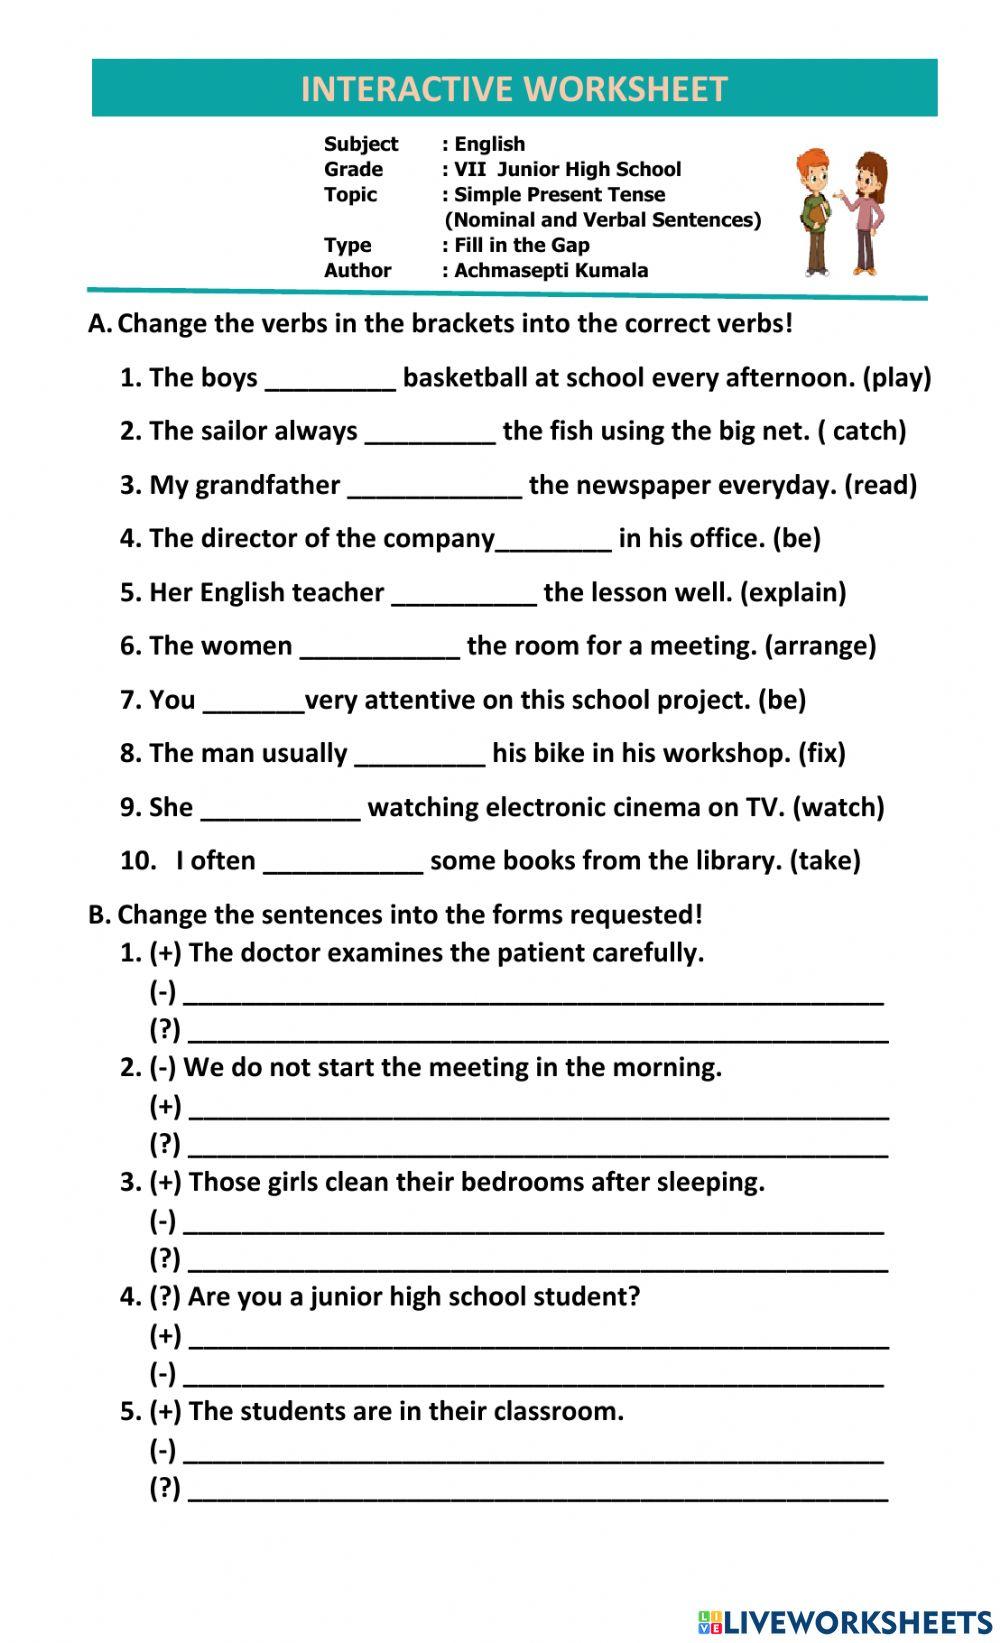 Simple Present Tense  Examples, Use & Worksheet